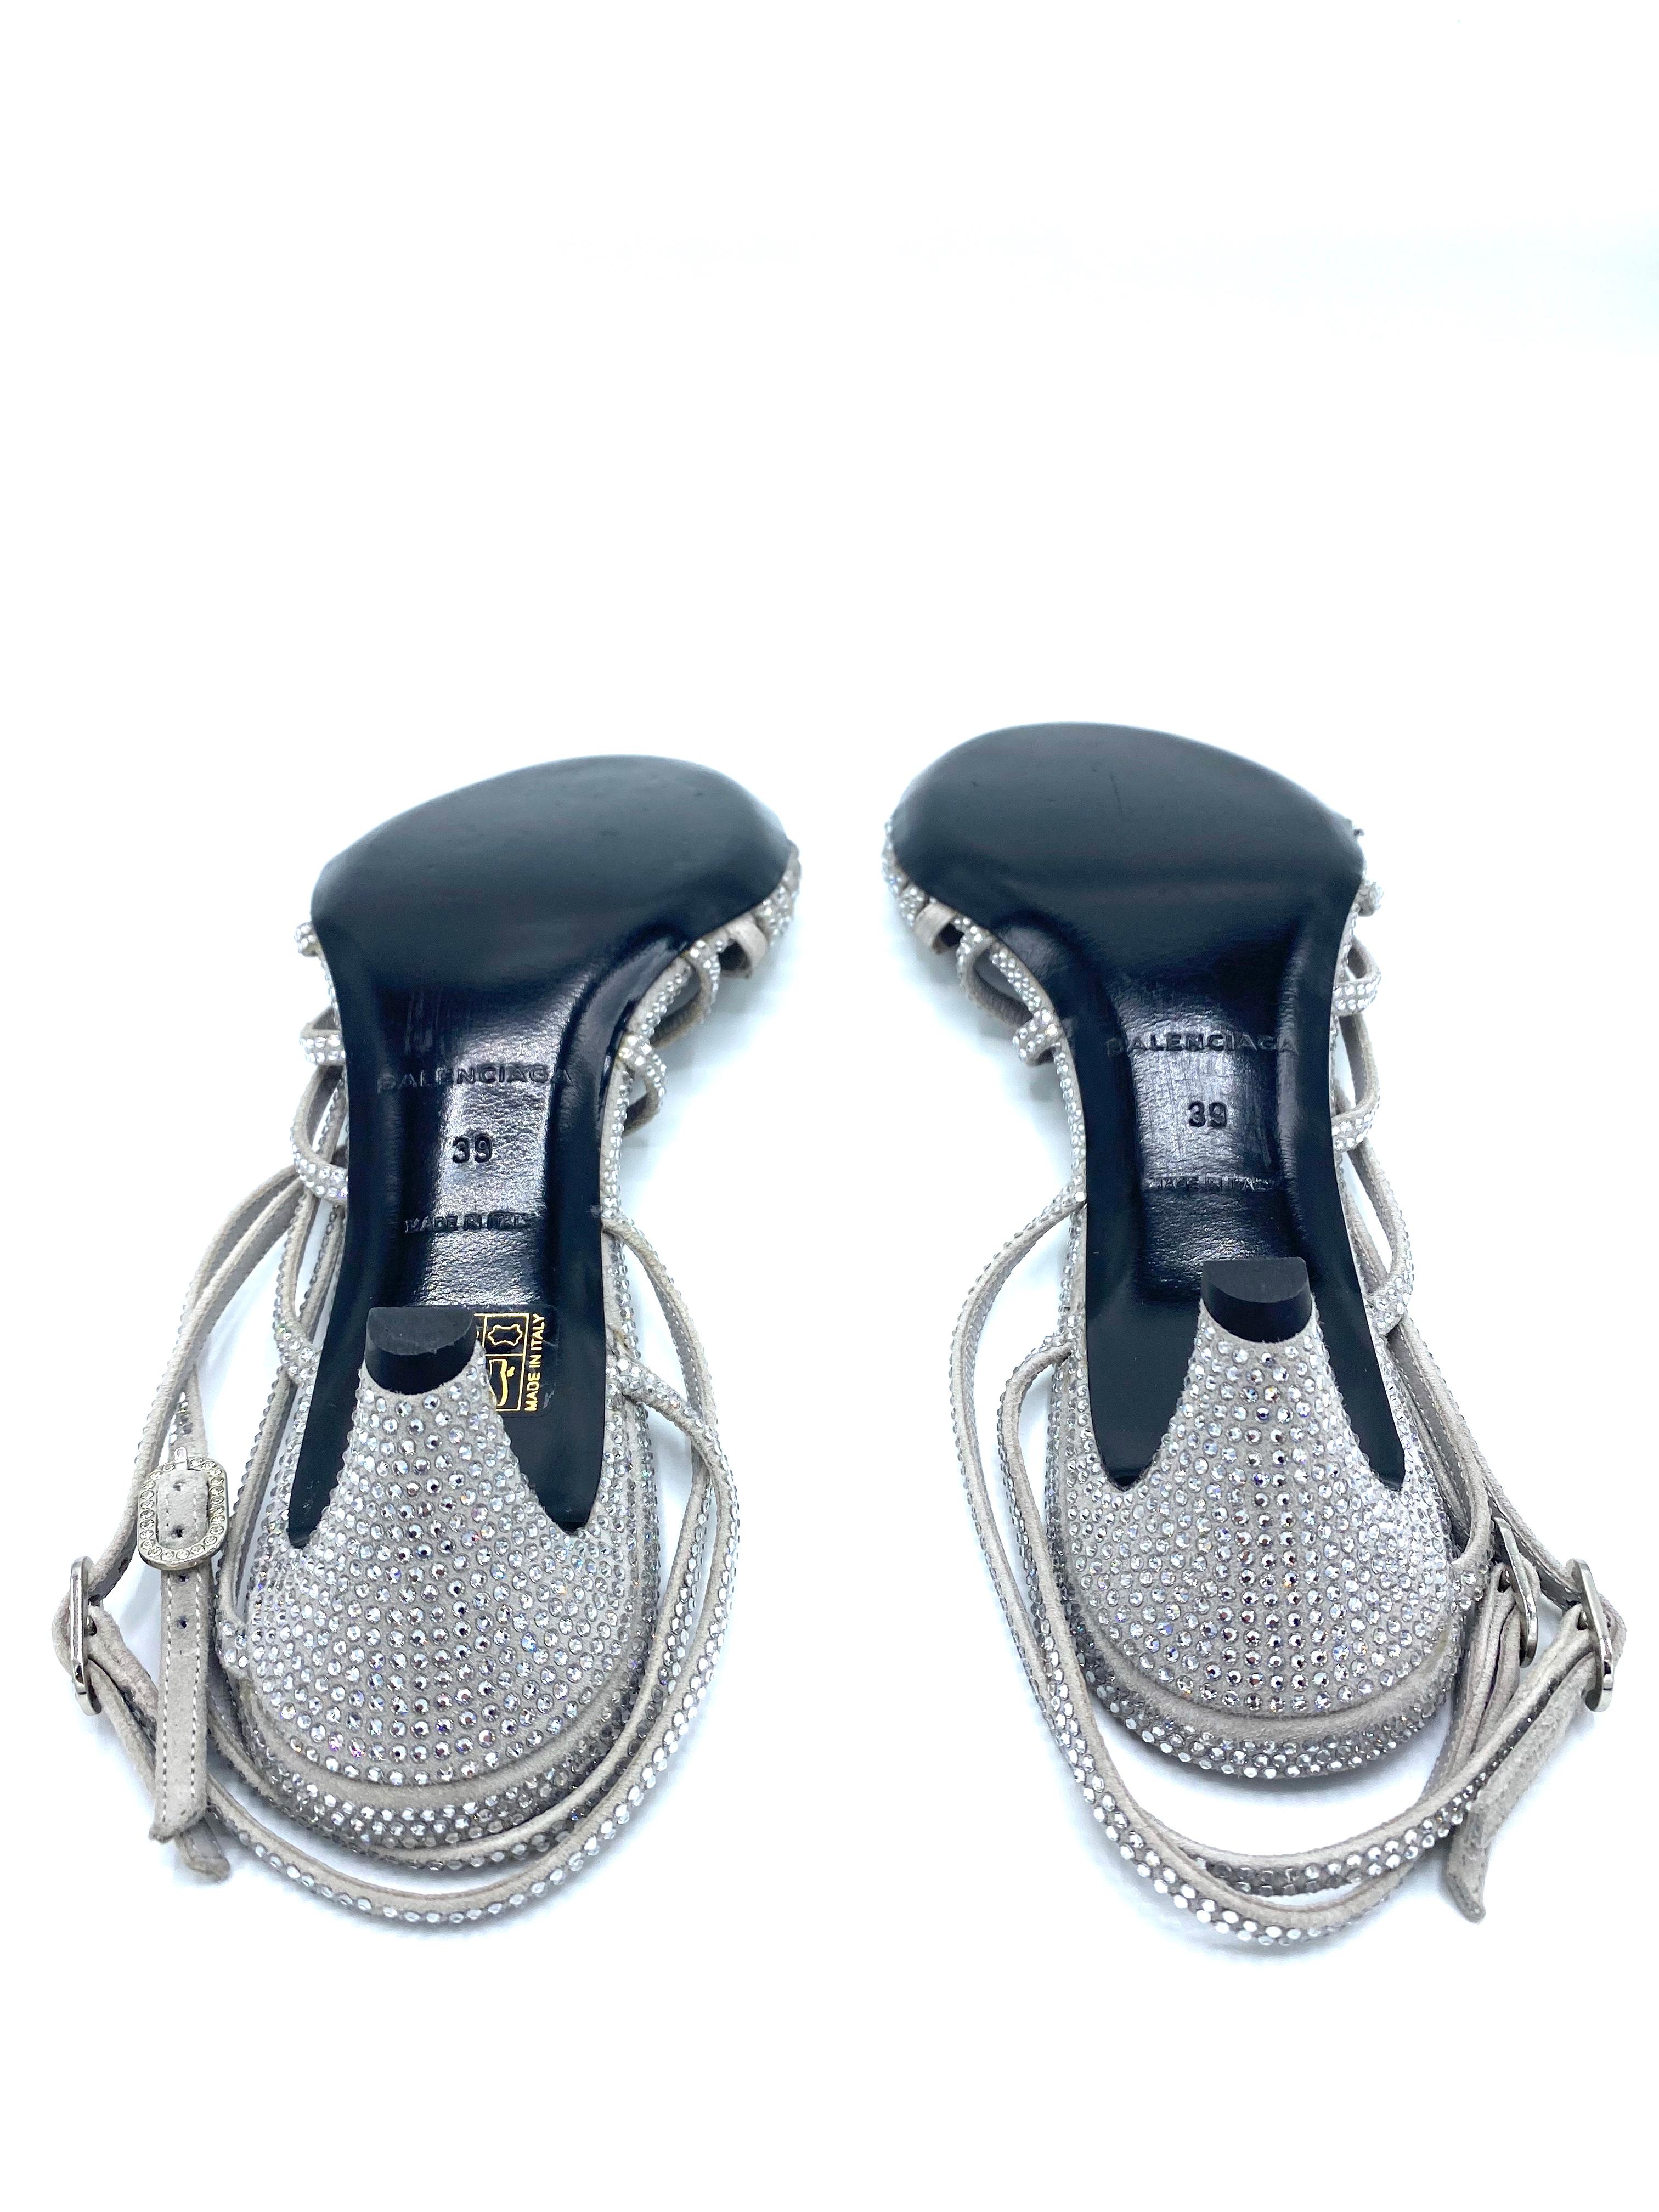 Balenciaga Crystal Embellished Grey Suede Strappy Heels Sandals Size 39  2